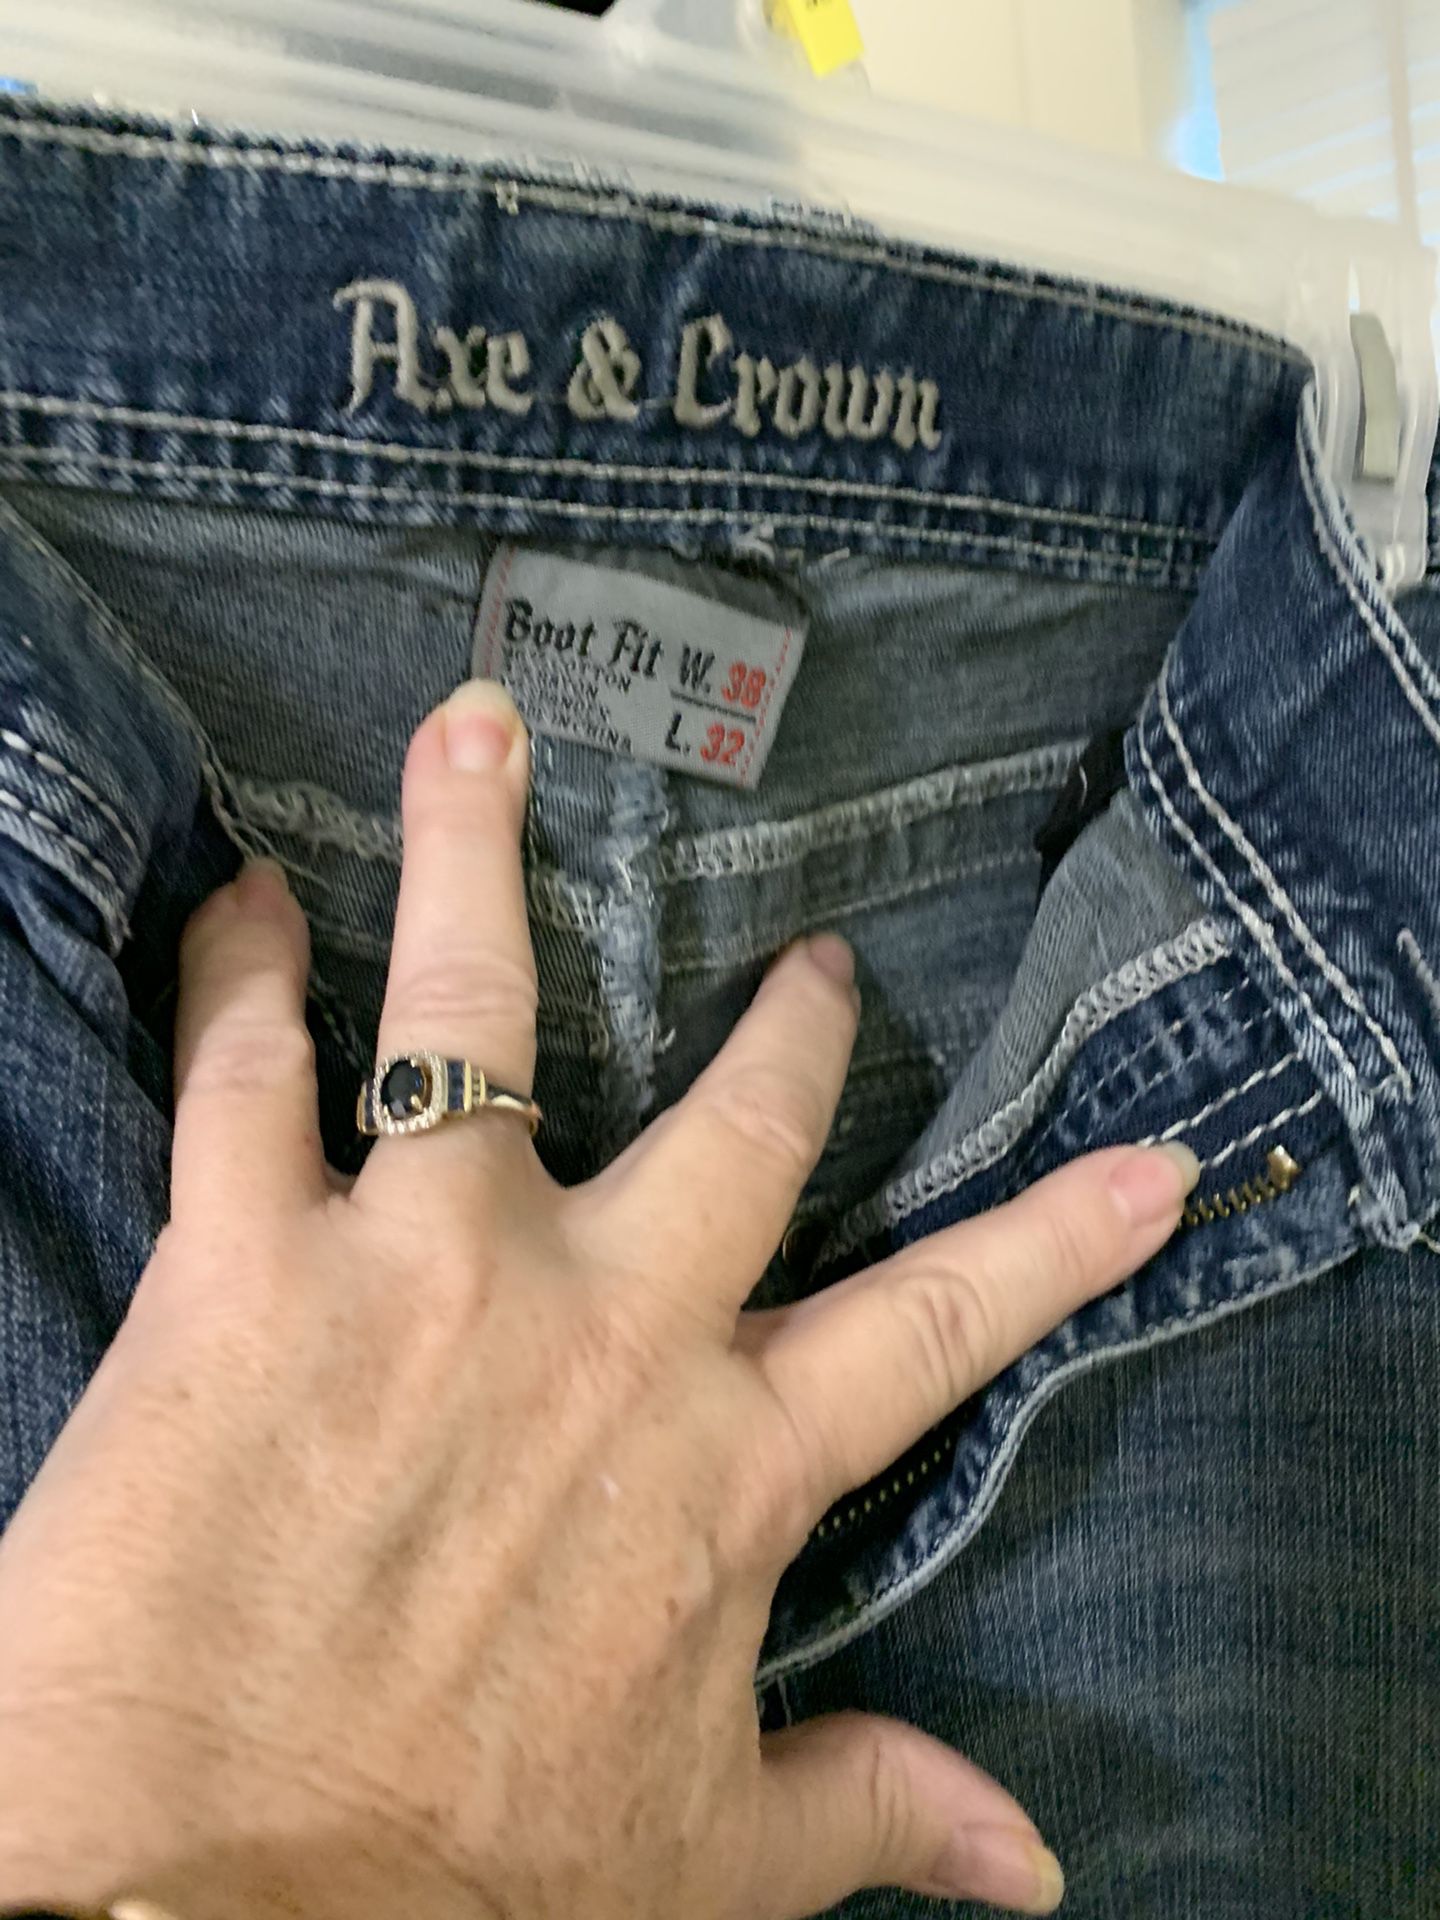 Men’s Axe &Crown Jeans